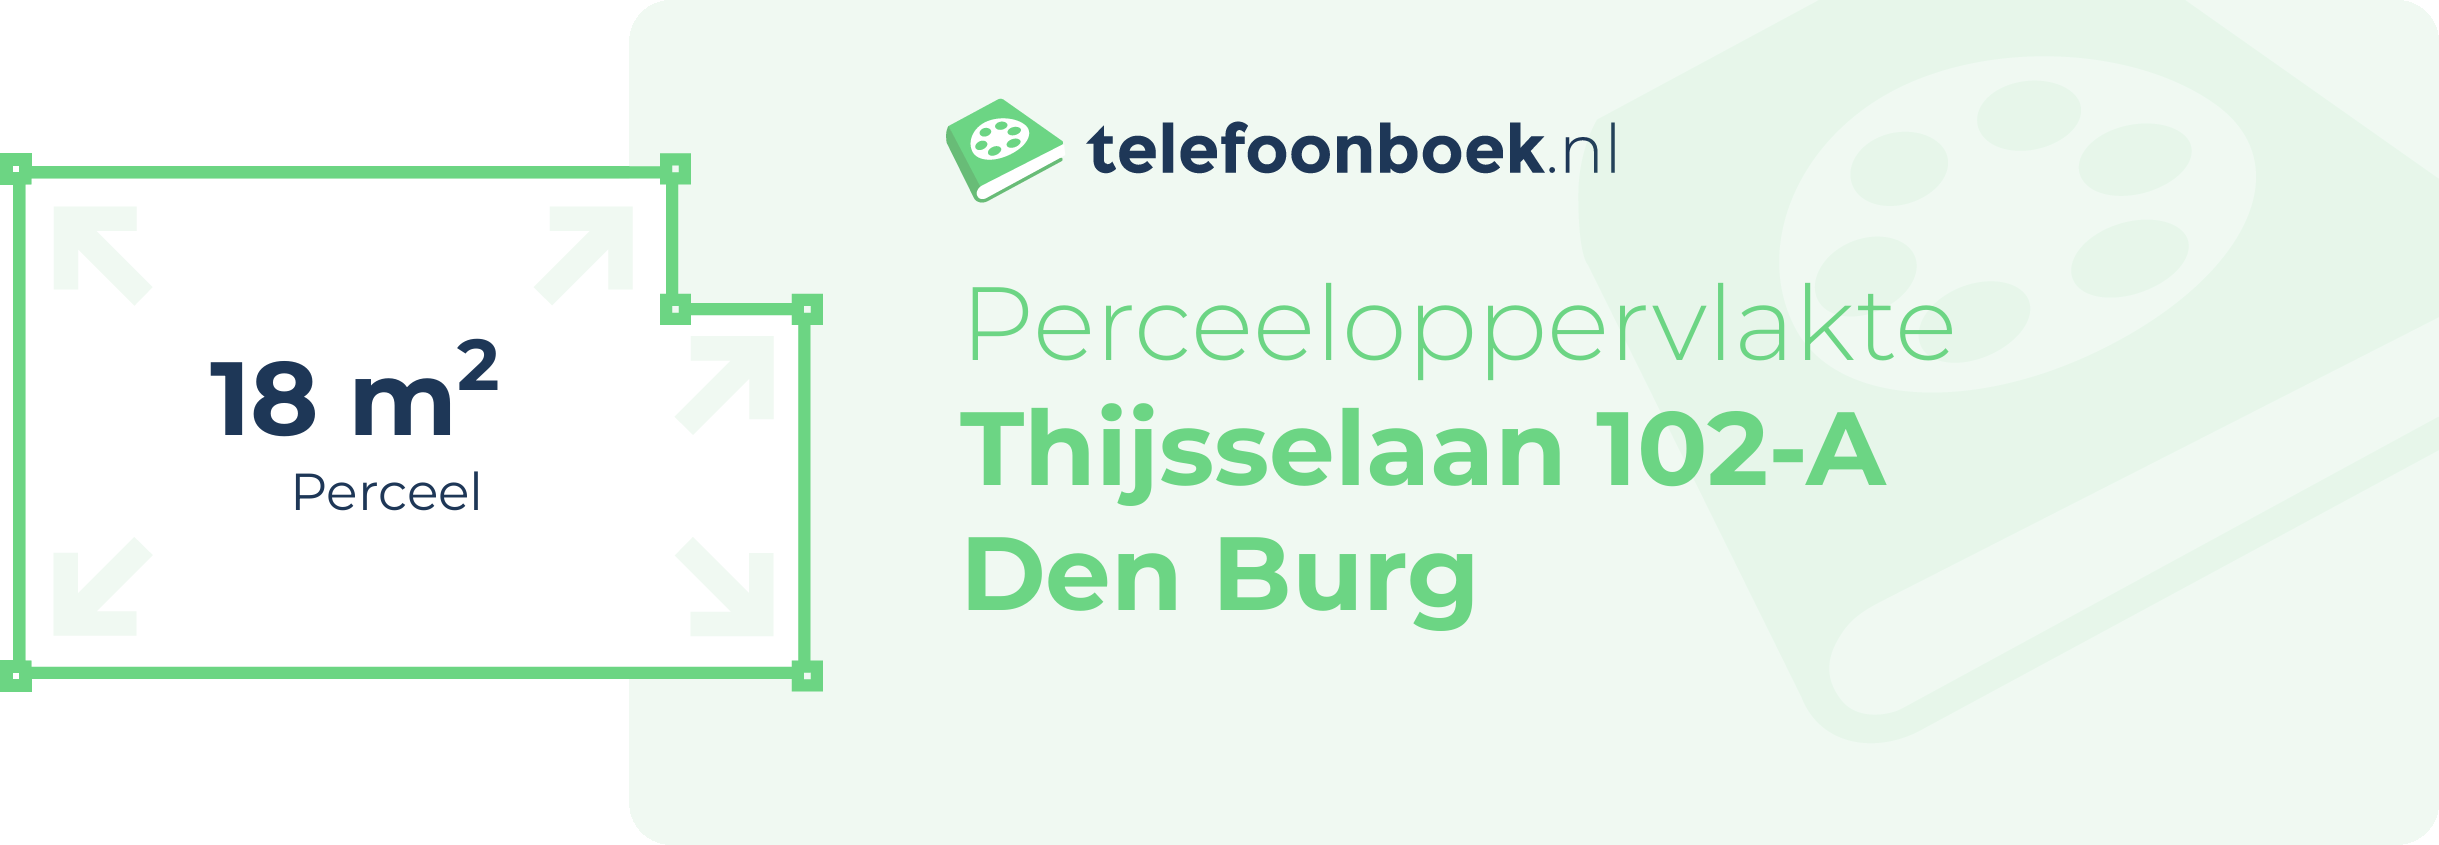 Perceeloppervlakte Thijsselaan 102-A Den Burg